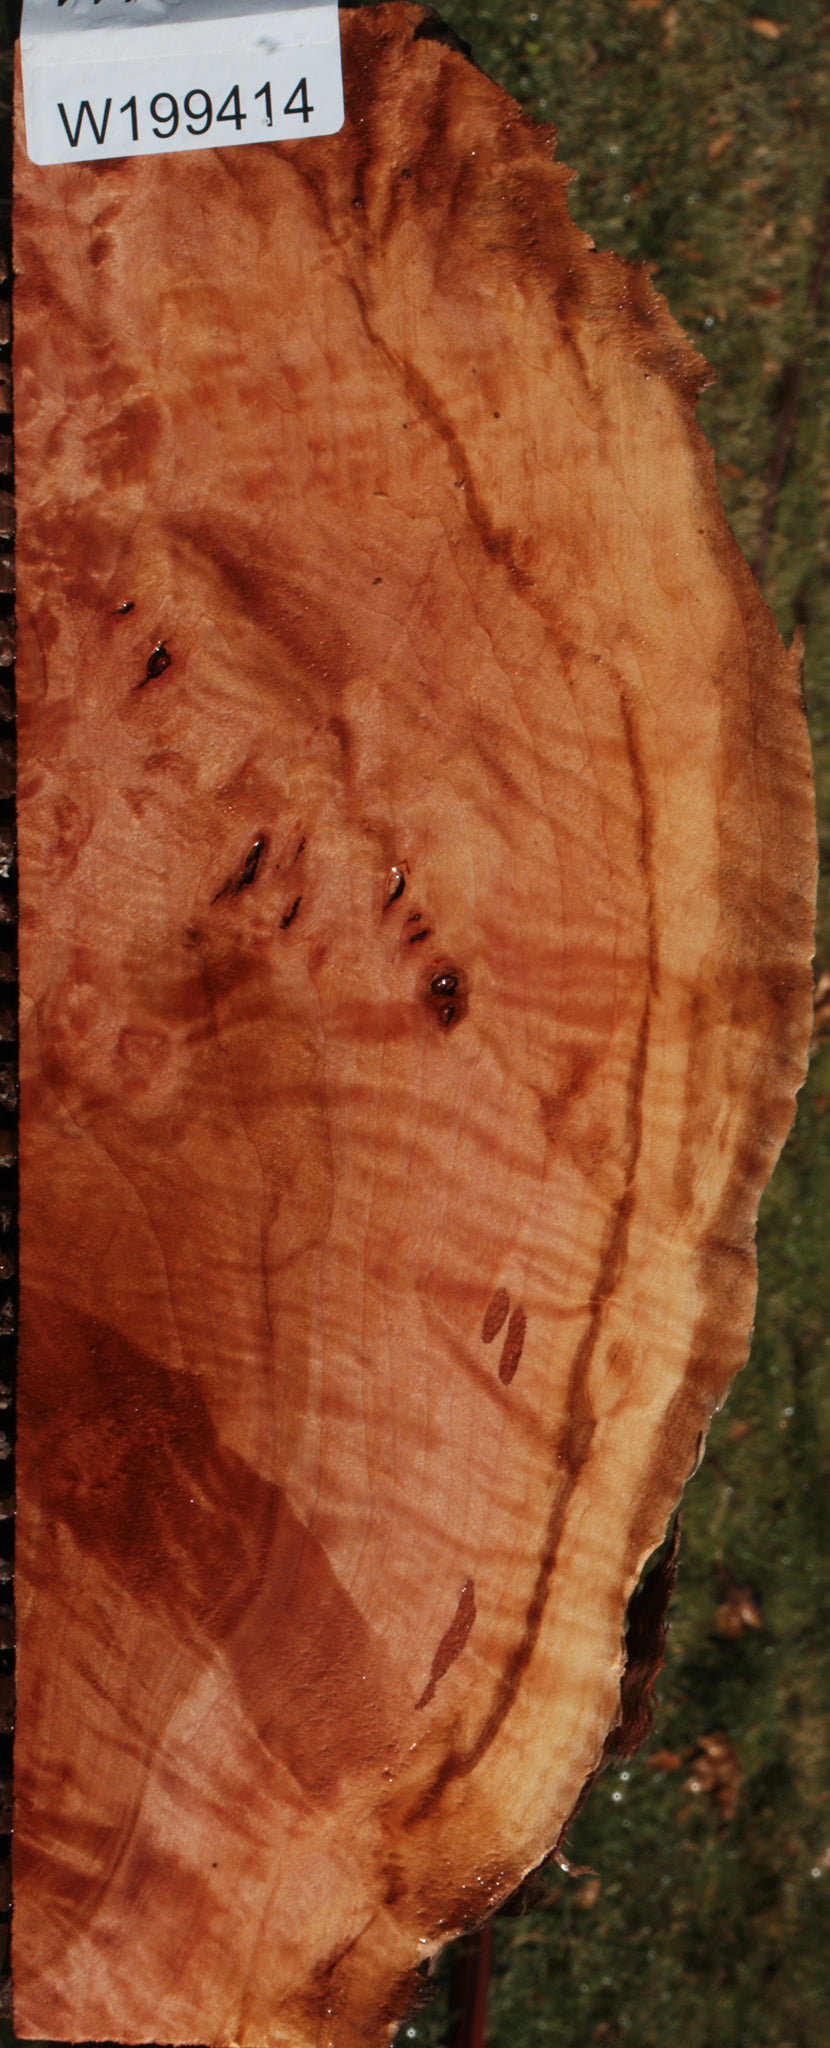 Brazilian Pepperwood Live Edge Lumber